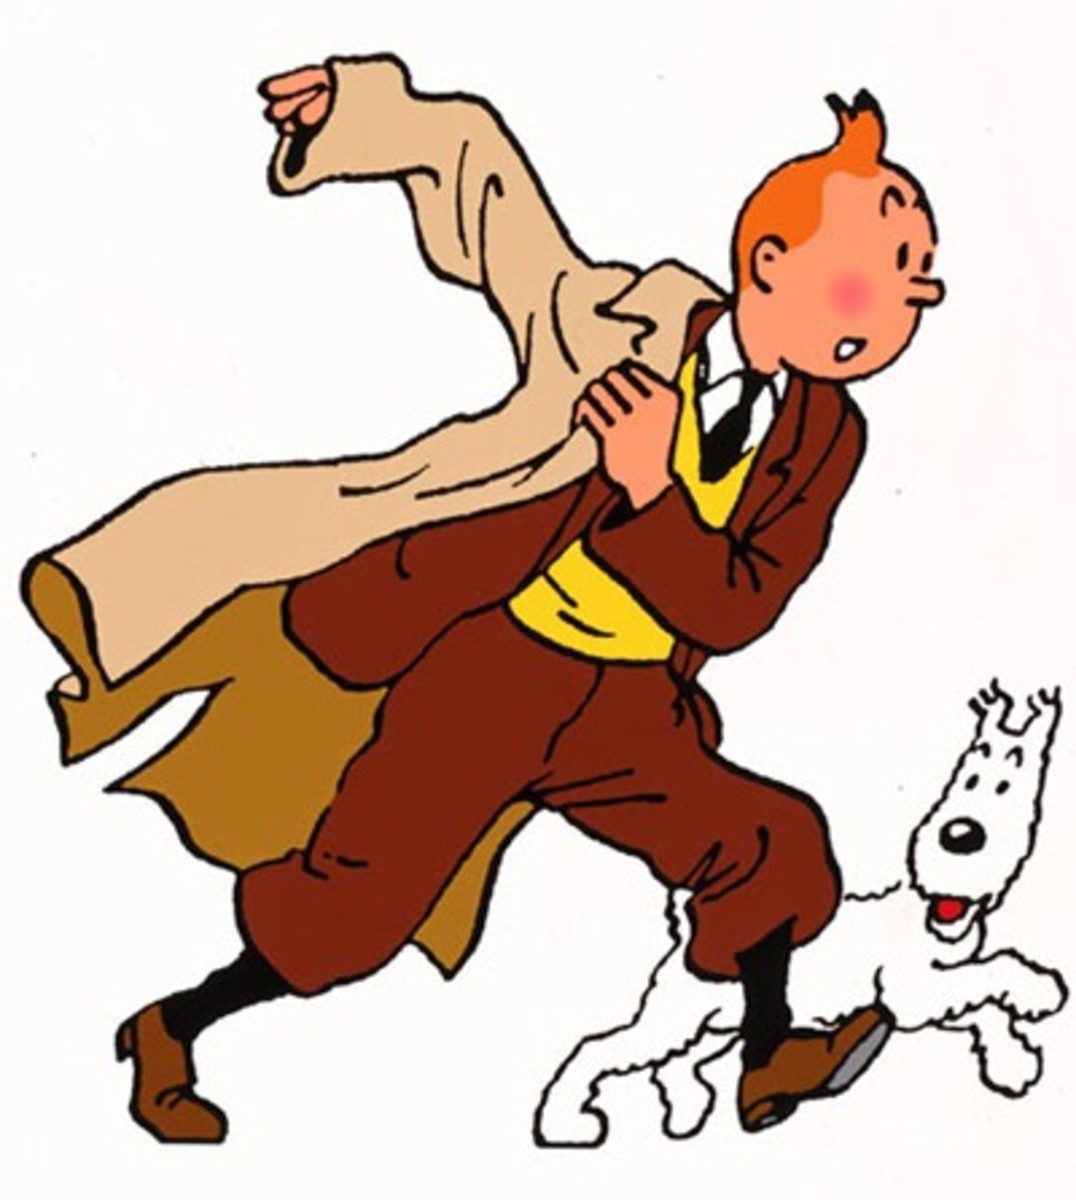 Amazing Adventures of Tintin- The Genius of Hergé